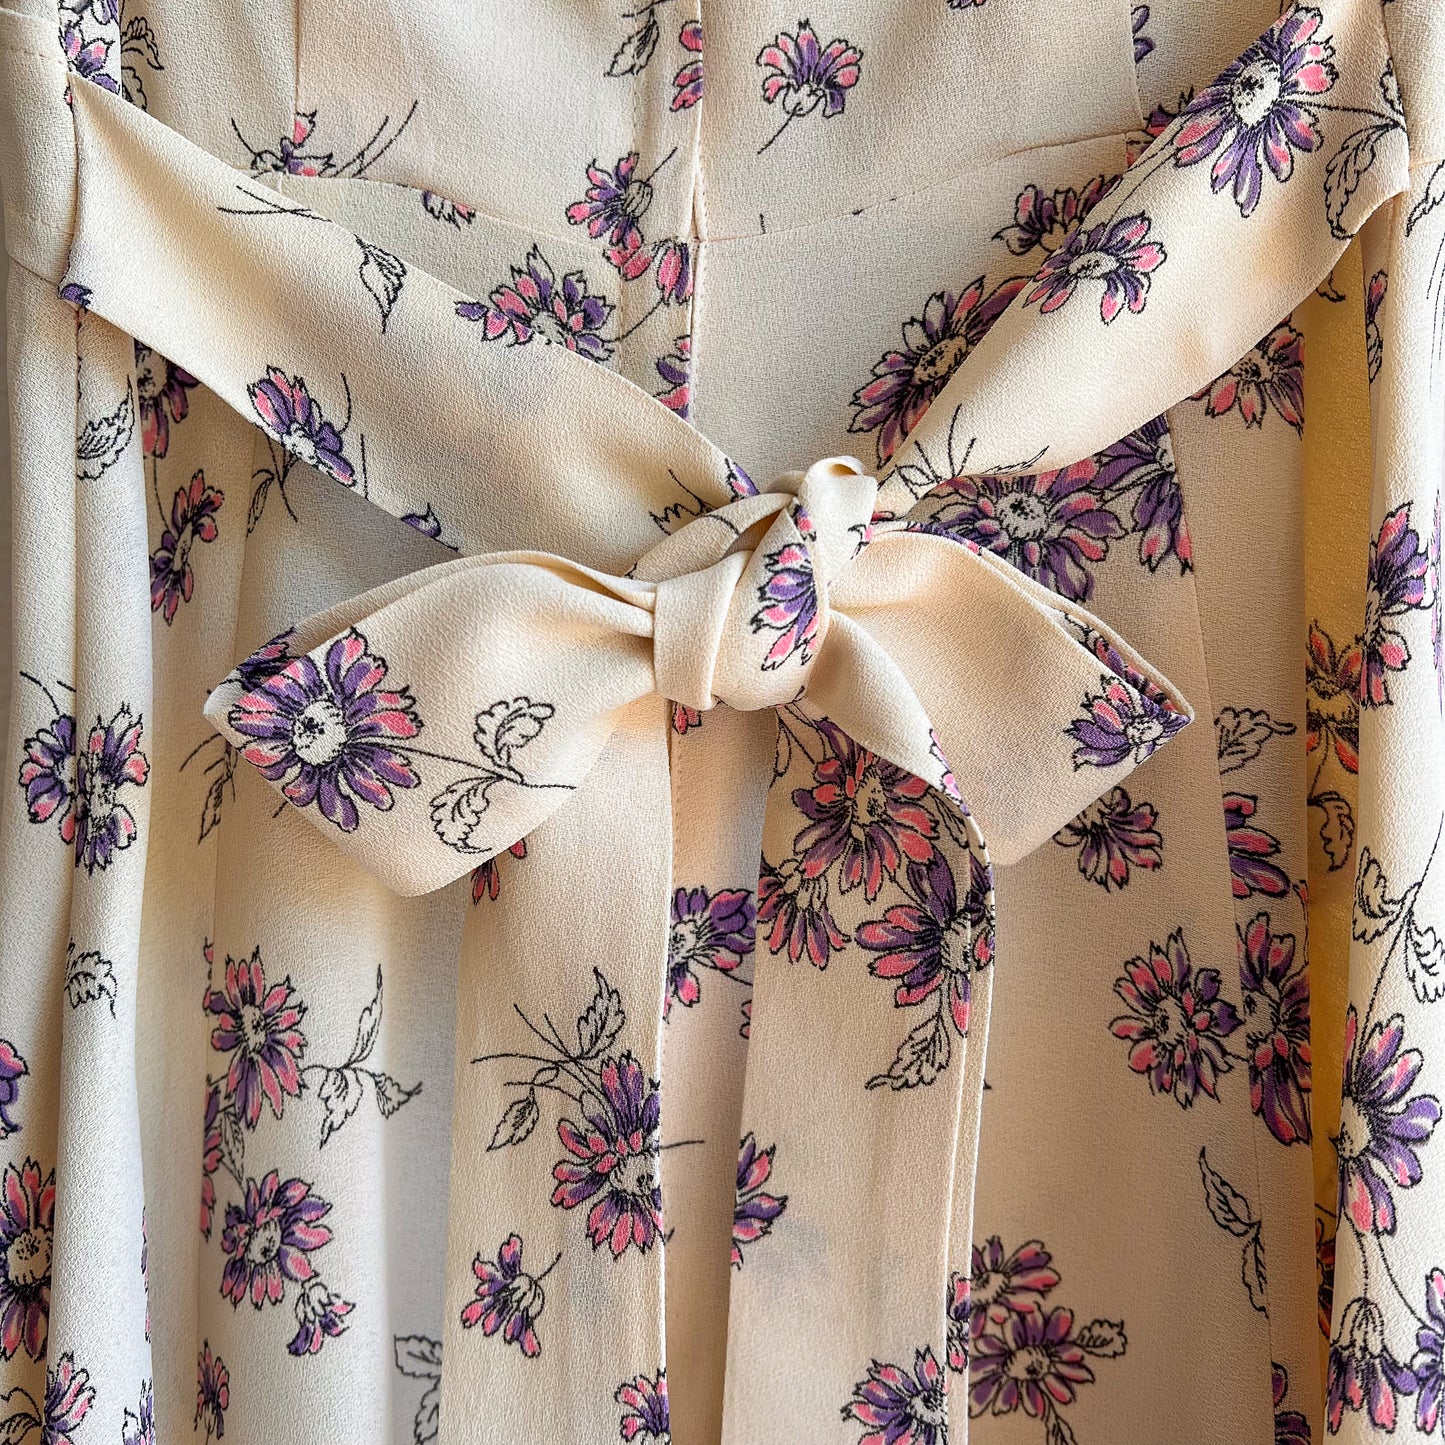 Darling 1970s Puff Sleeve Empire Waist Floral Midi Dress (XS)